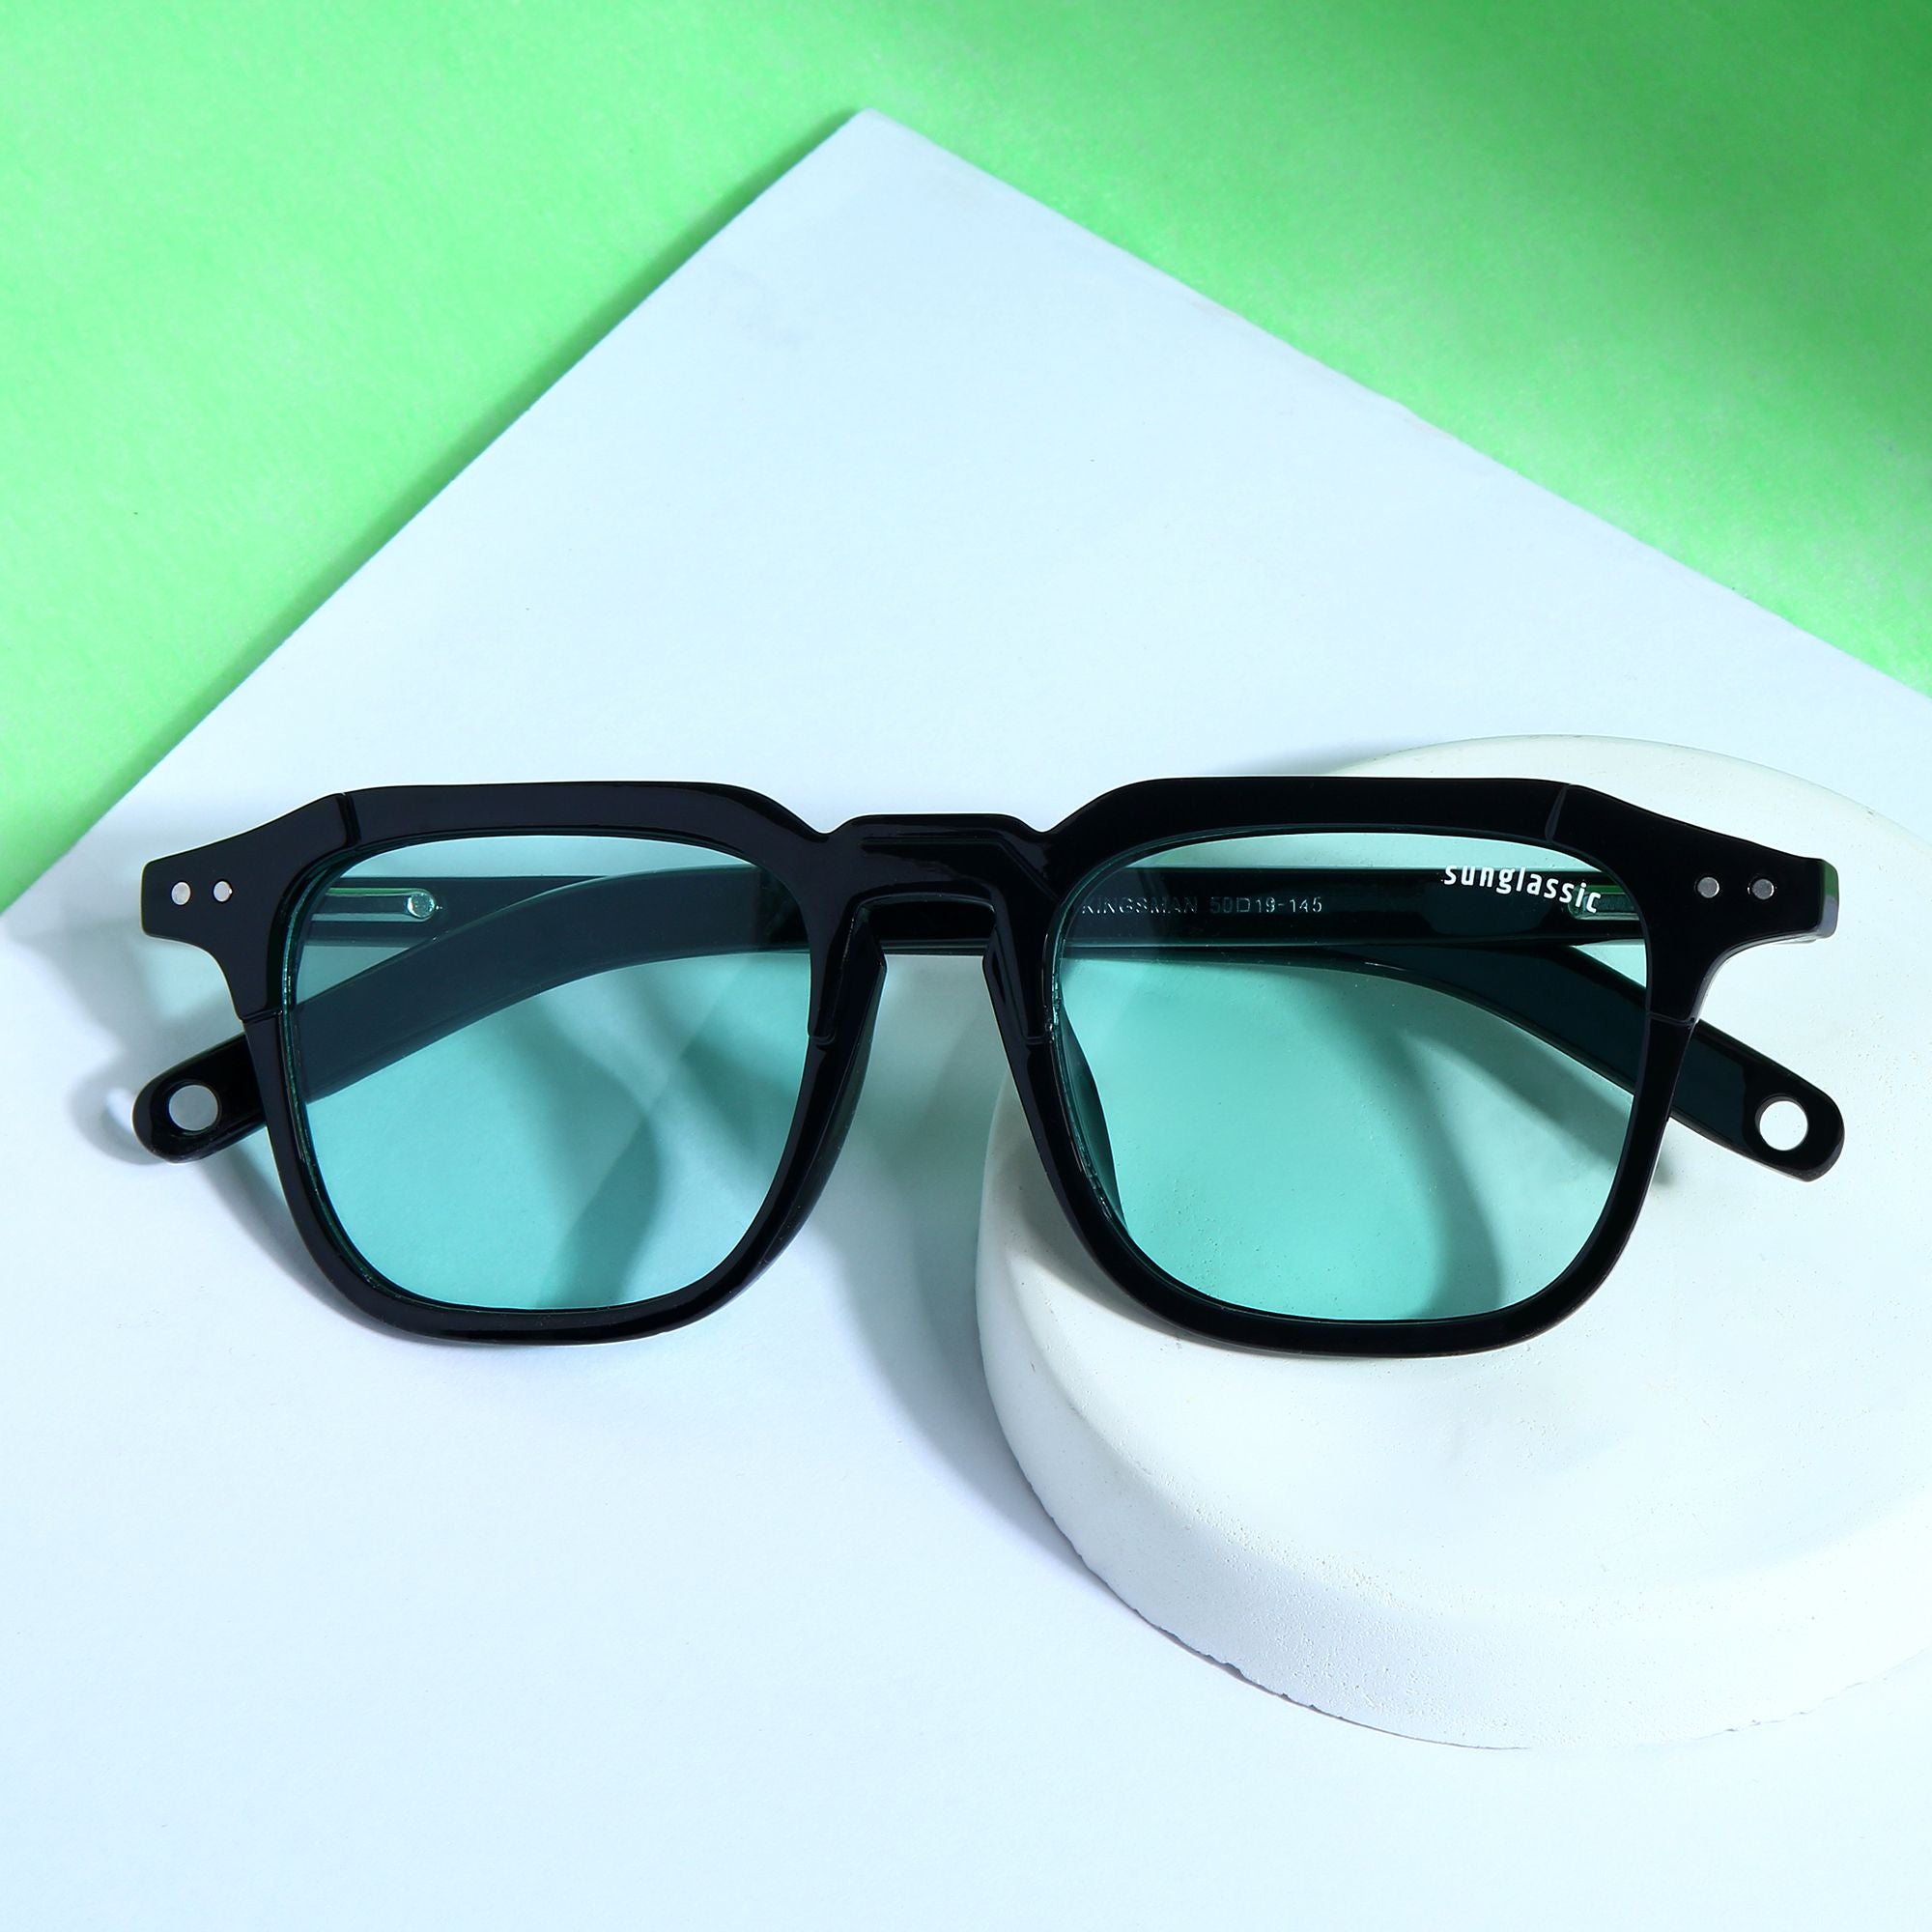 Kingsman black green square sunglasses top view - Sunglassic